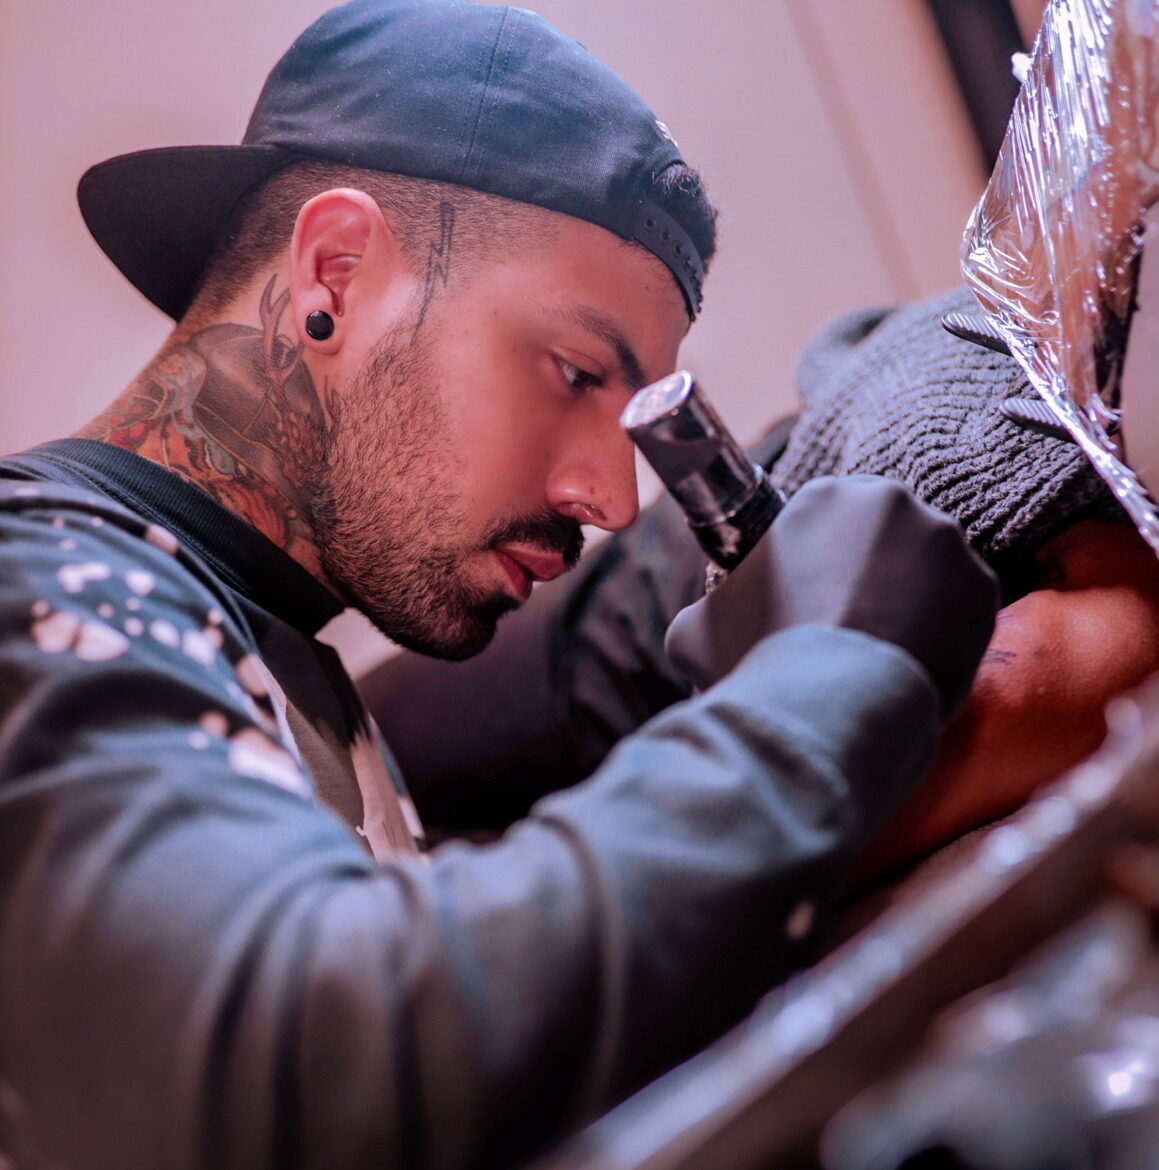 Pablo Frias, Ink Nation Tattoo Studio, @pablo_frias.tattoo